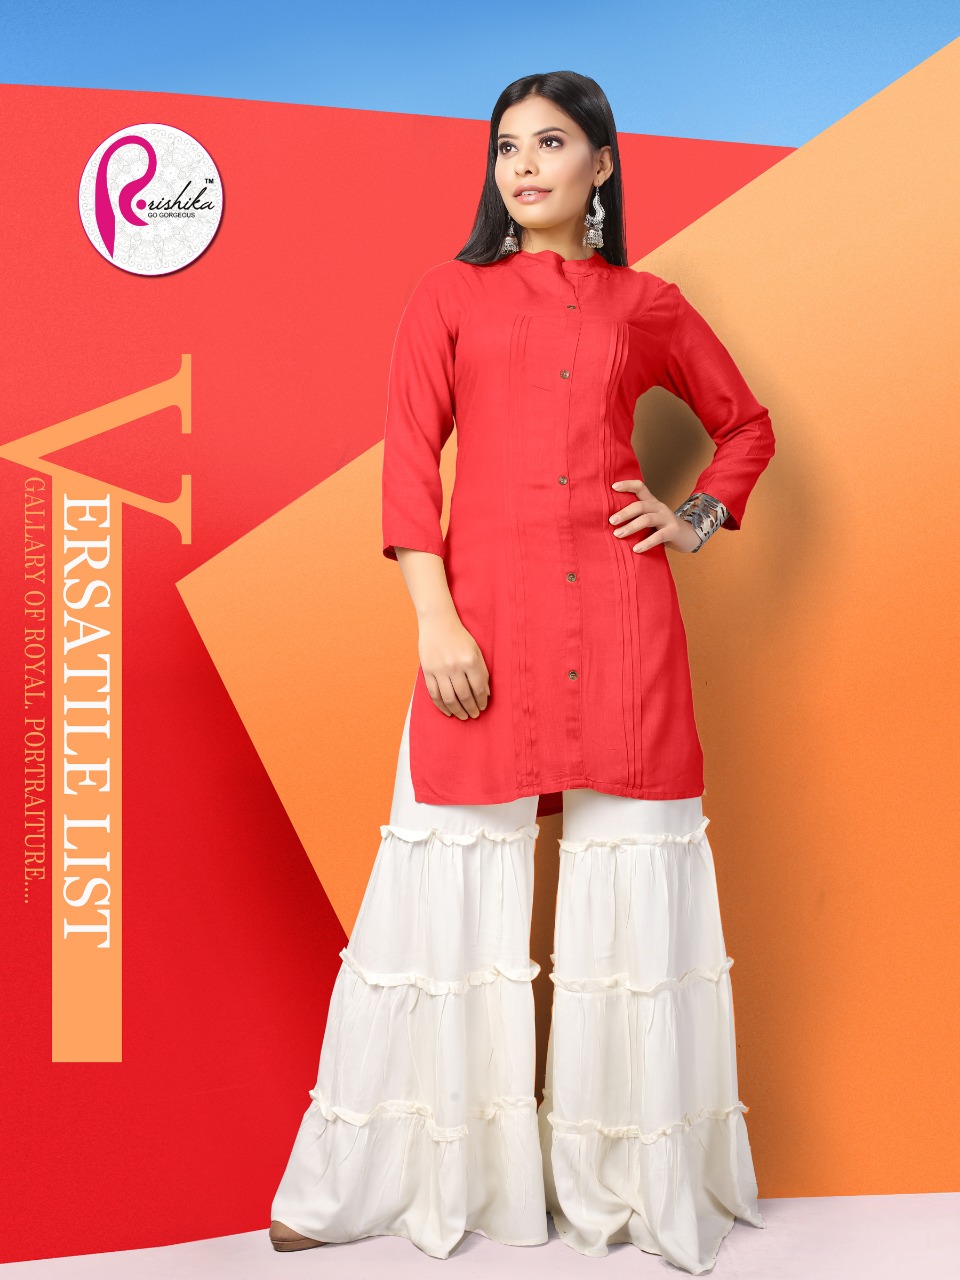 Tanishk By Rishika 1011 To 1010 Series Stylish Fancy Colorful Collection Casual Wear & Ethnic Wear Rayon Slub Kurtis At Wholesale Price